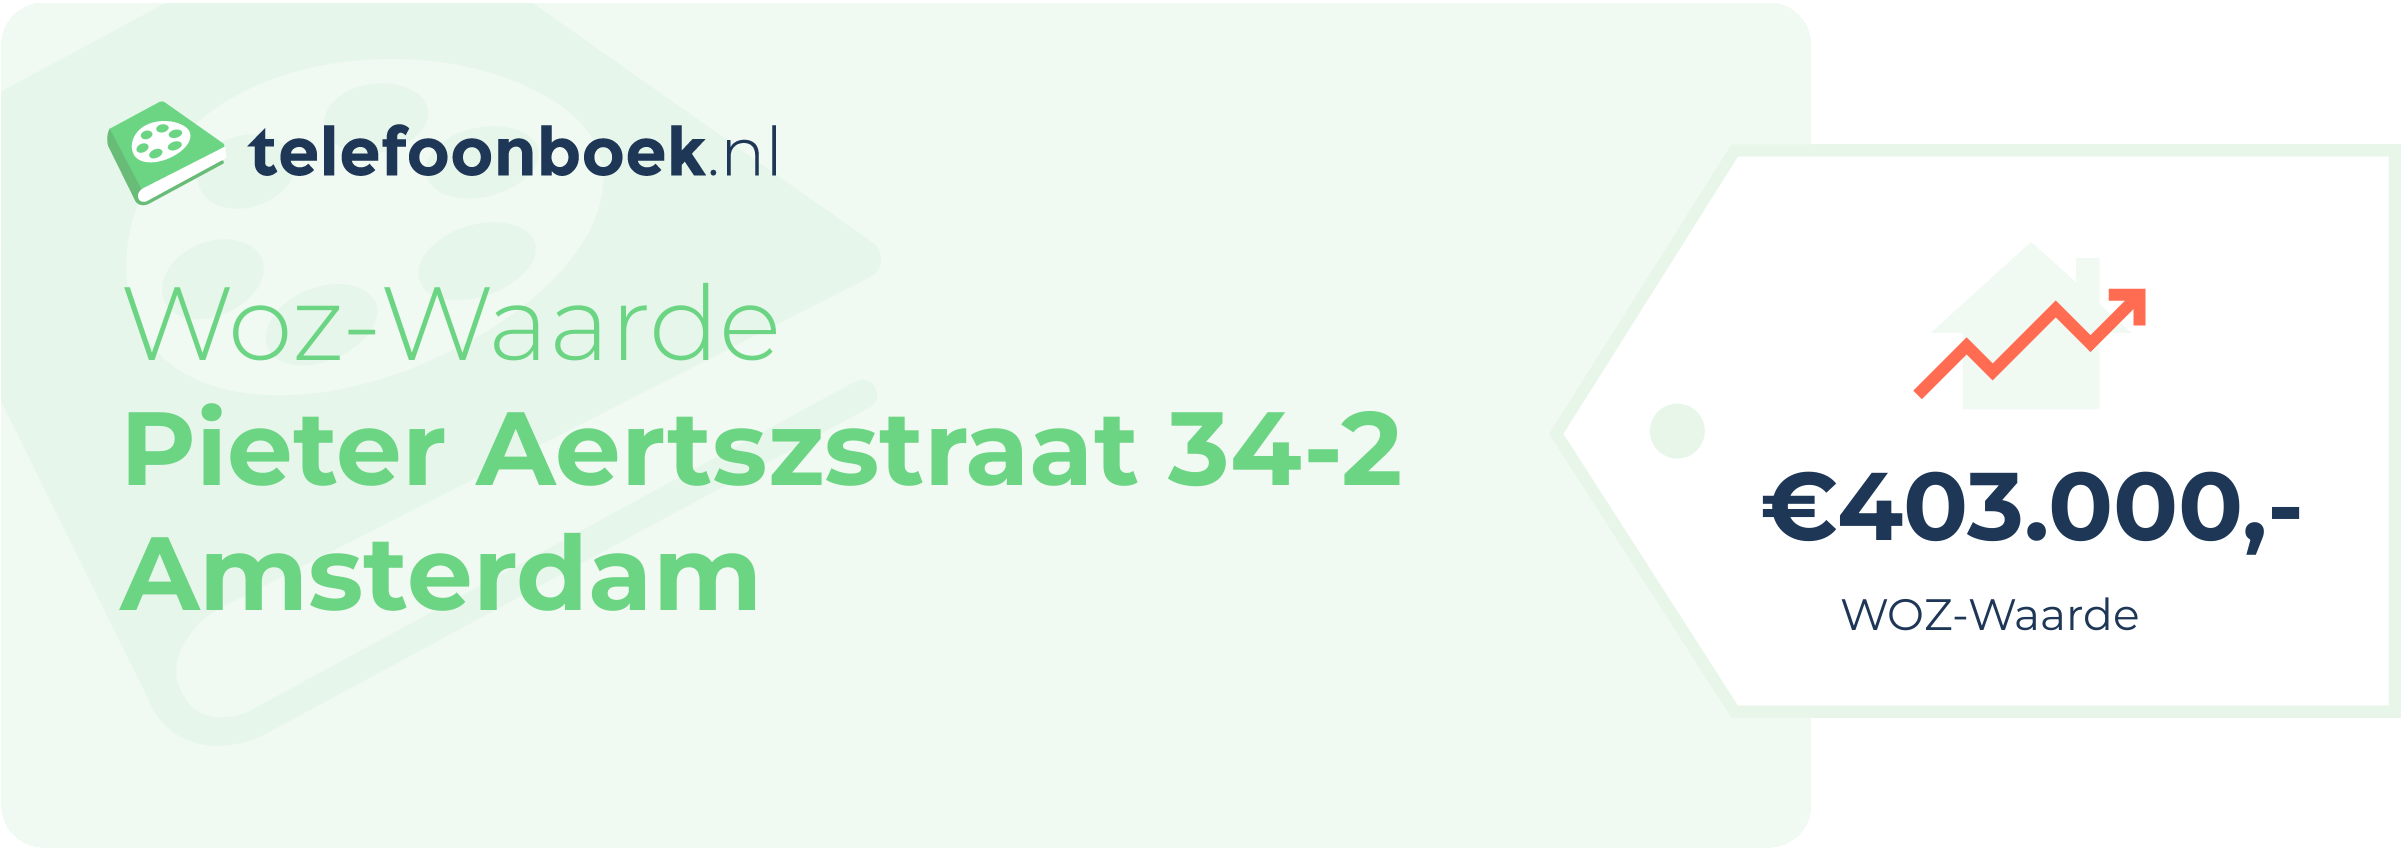 WOZ-waarde Pieter Aertszstraat 34-2 Amsterdam